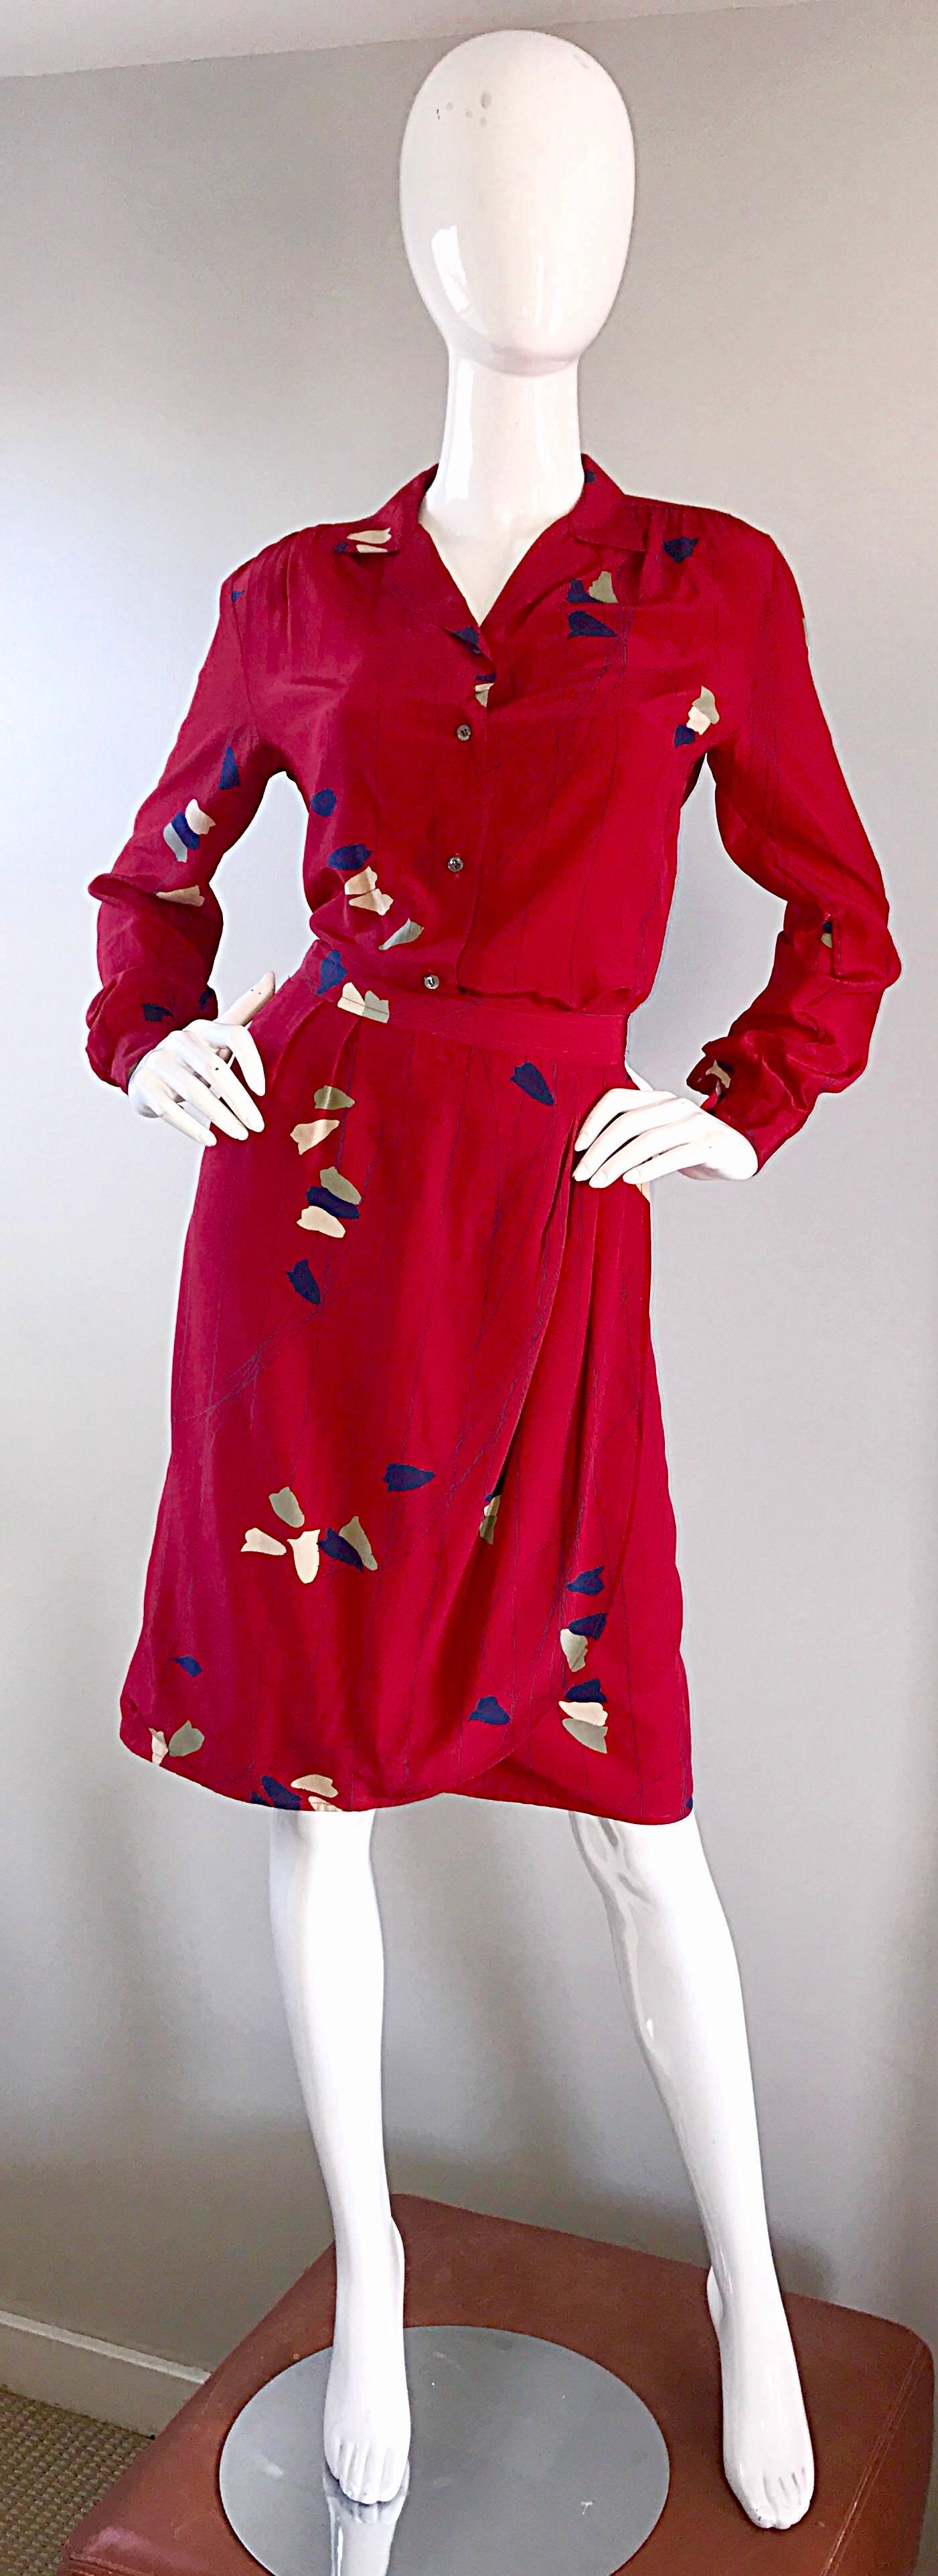 1970s Alan Austin Italian Red Silk Vintage Blouse and Skirt 70s Dress Ensemble For Sale 2